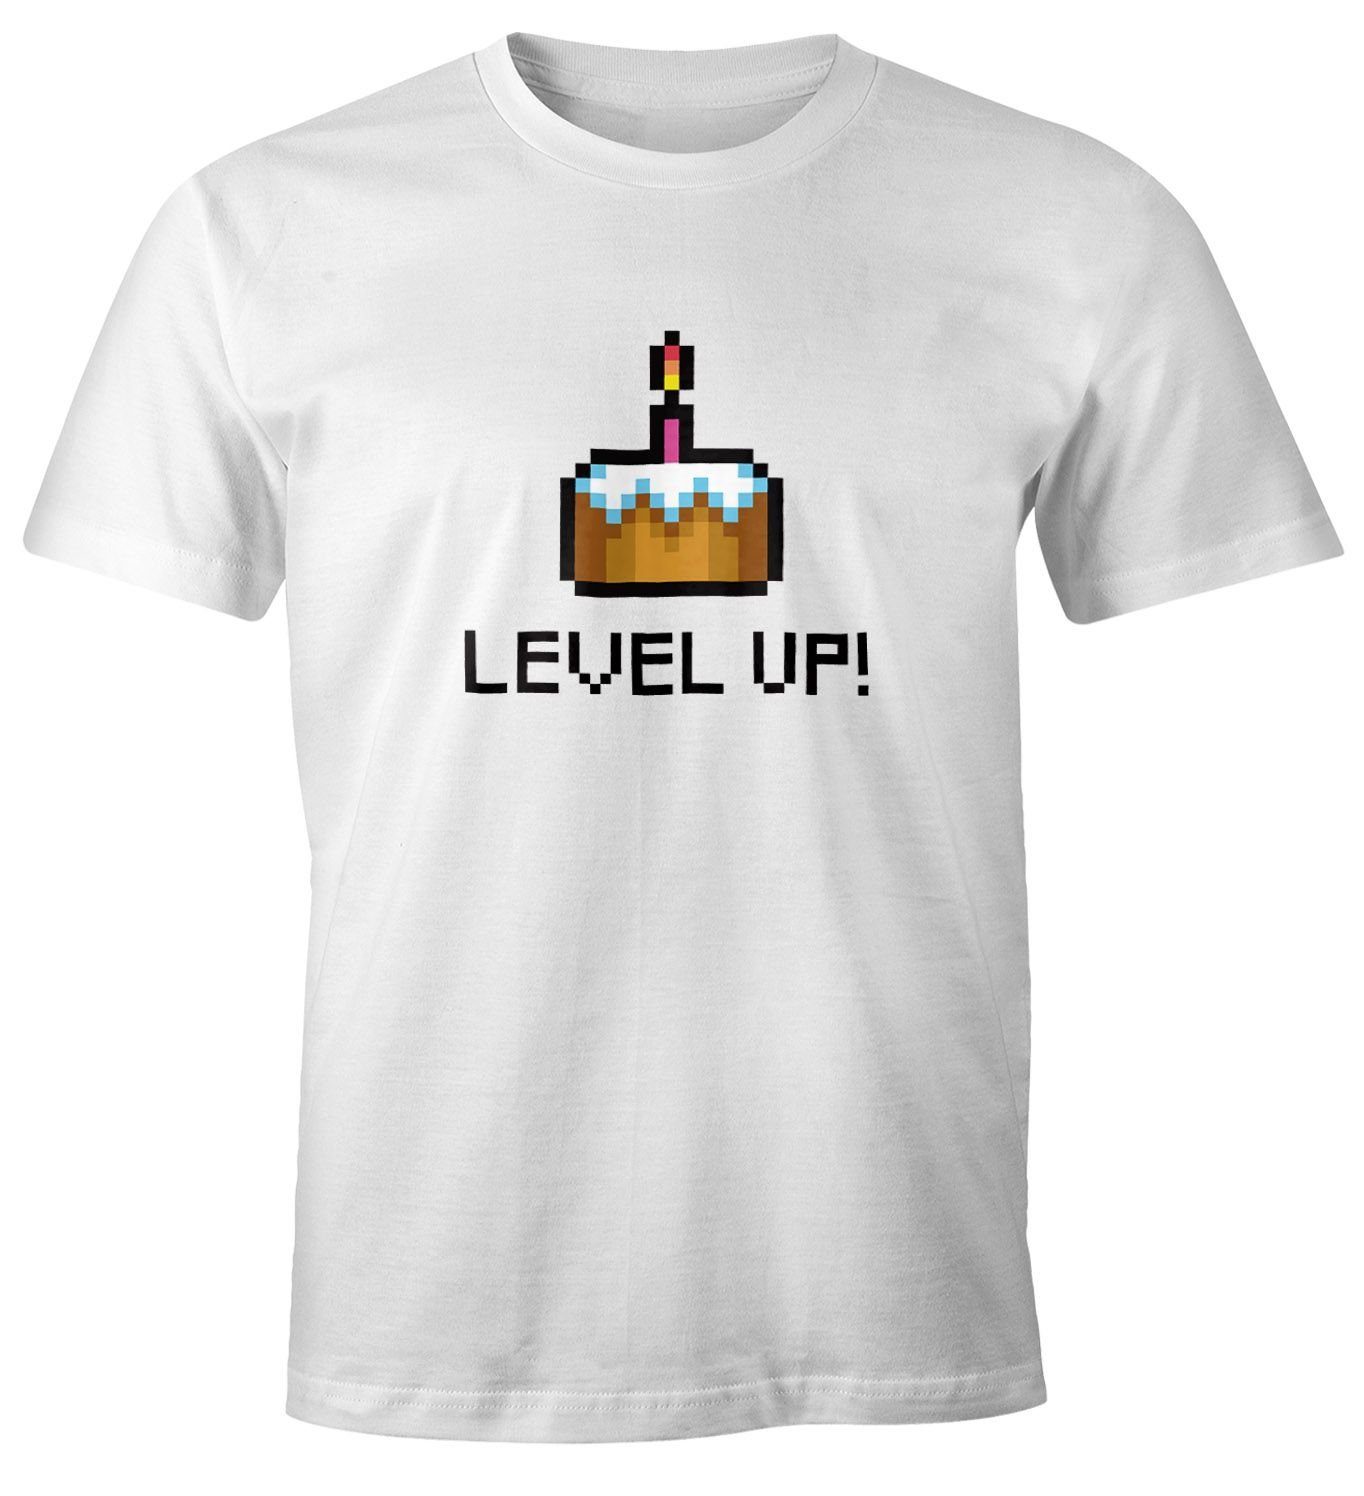 MoonWorks Print-Shirt Herren T-Shirt Geburtstag Level Up Pixel-Torte Retro Gamer Pixelgrafik Geschenk Arcade Fun-Shirt Moonworks® mit Print weiß